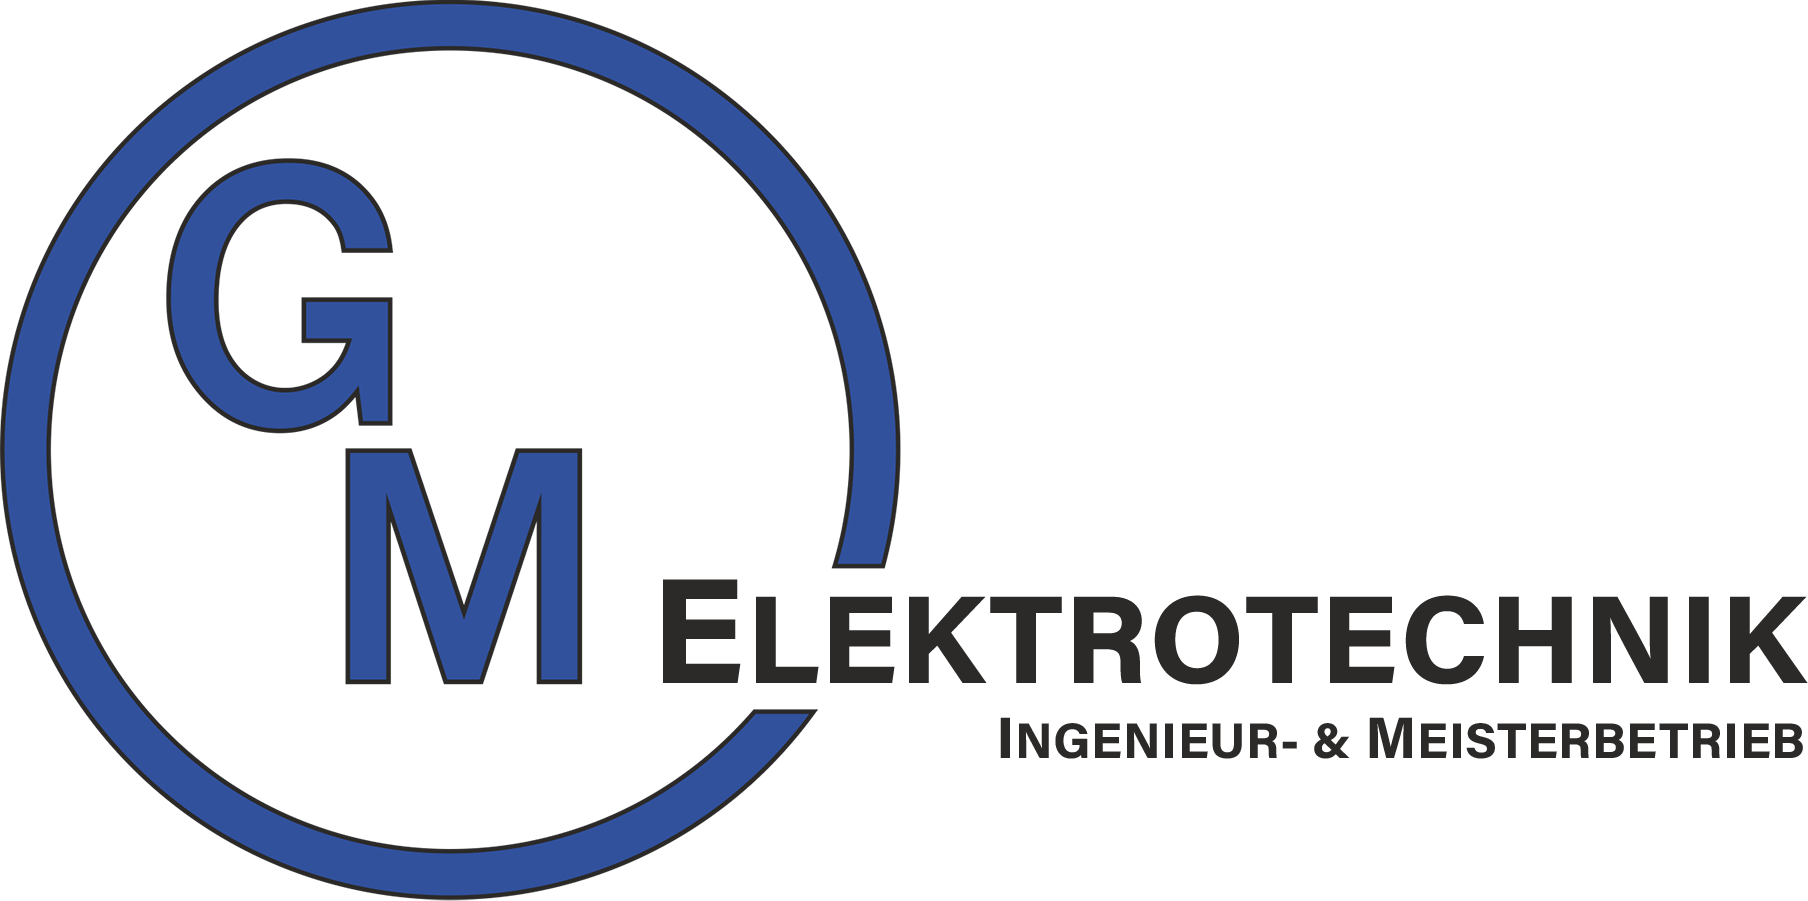 GM Elektrotechnik